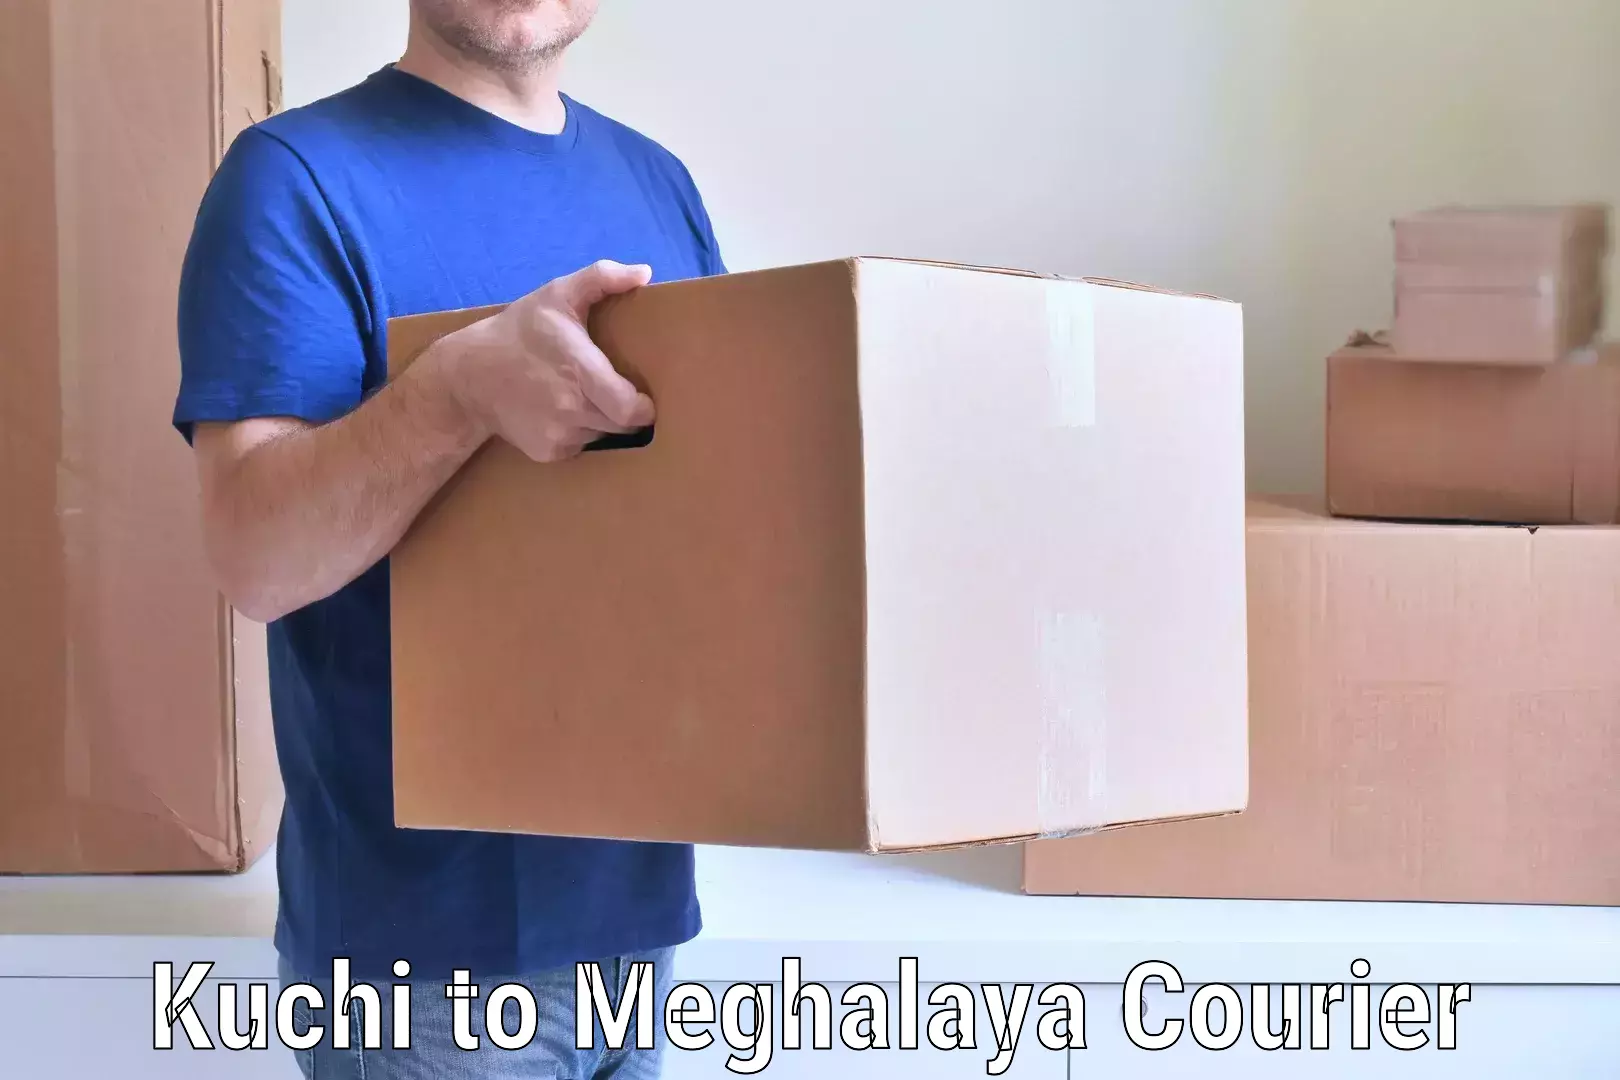 Moving and packing experts Kuchi to Meghalaya